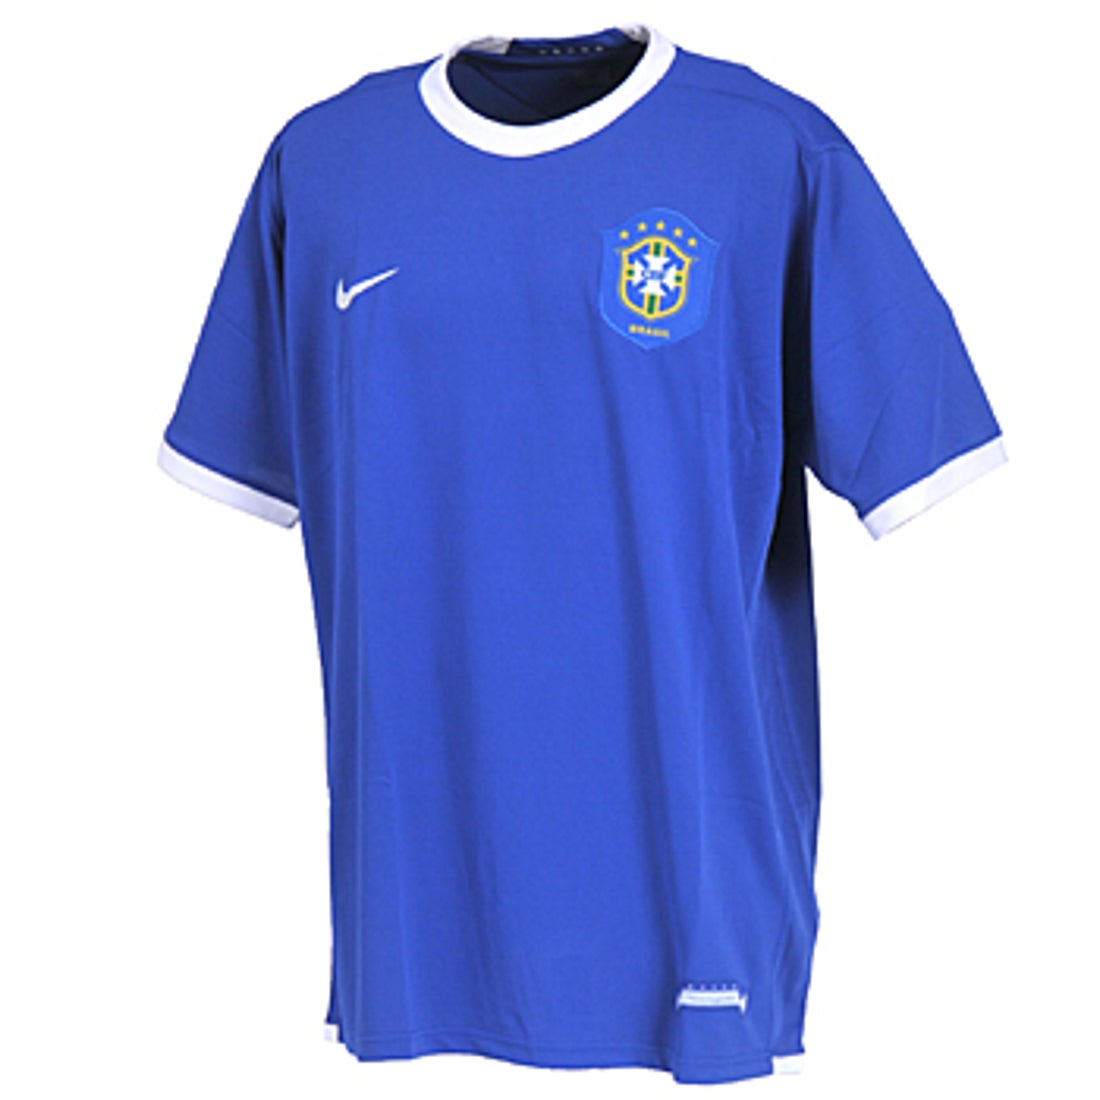 Nike ブラジル代表 06 07 ユニフォーム アウェイ 半袖 1030 493 代表 クラブユニフォーム サッカーショップ Sws